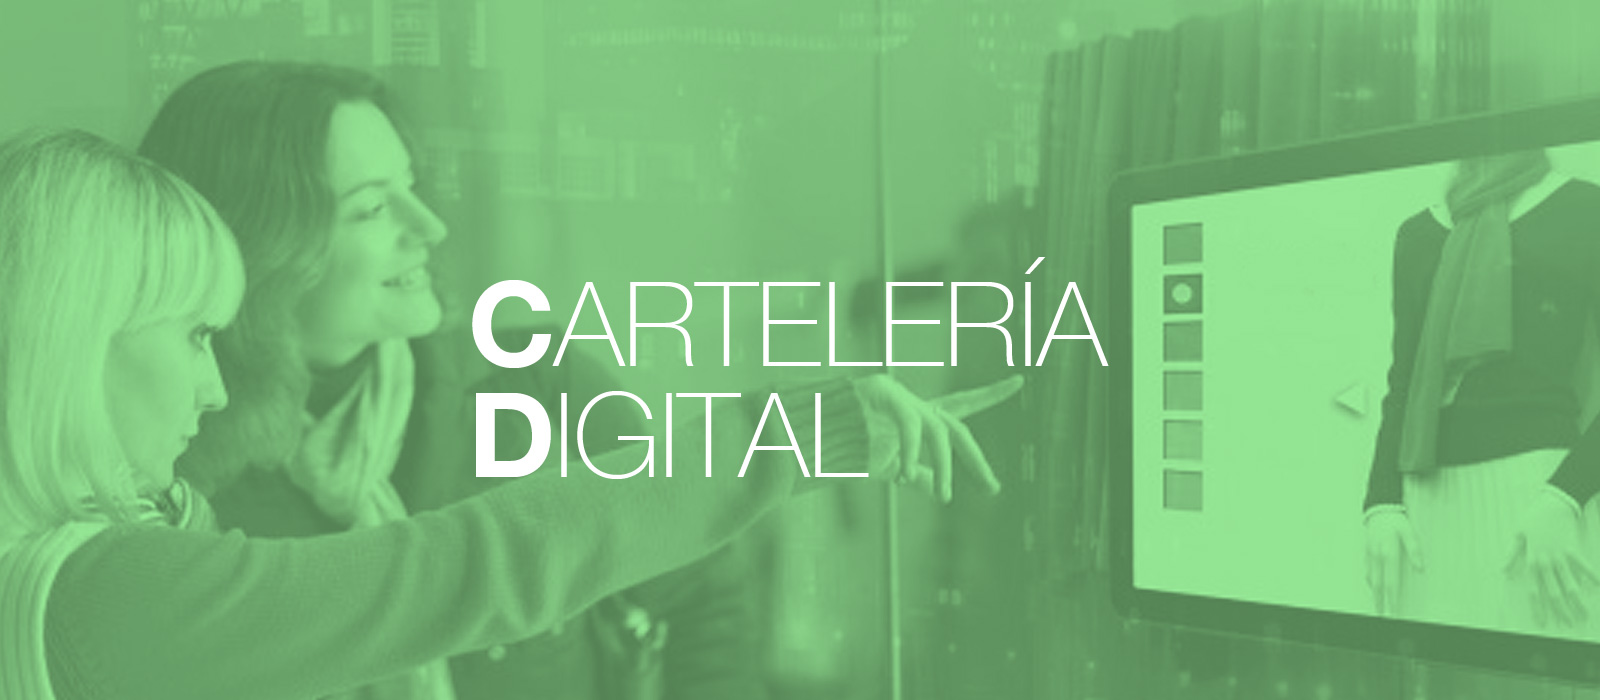 Cartelería Digital Madrid. OmDigital servicio integral.